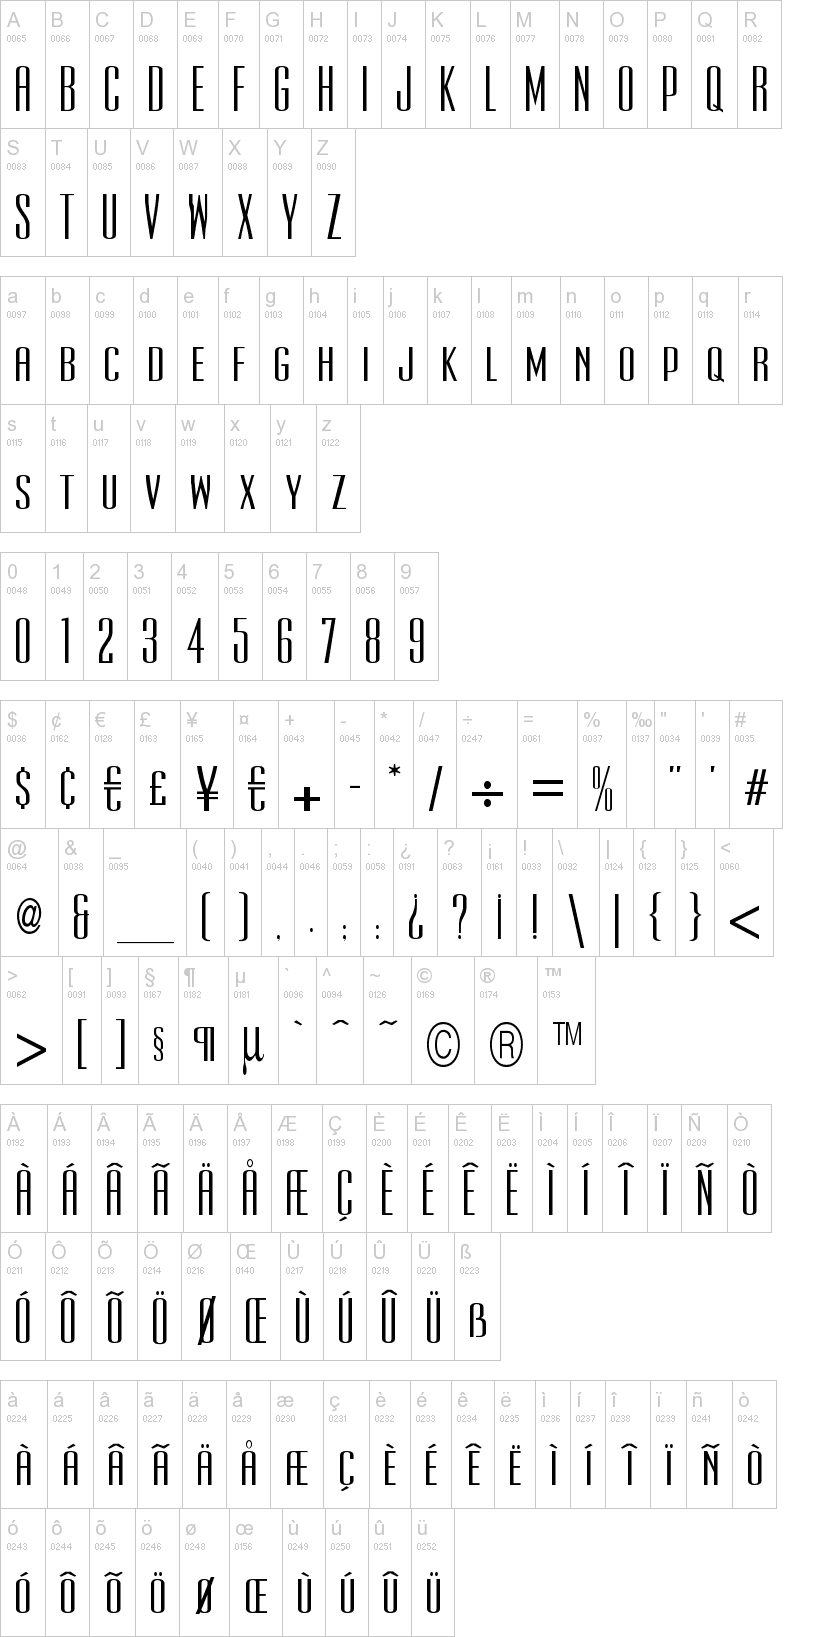 Ultra Condensed Sans Serif